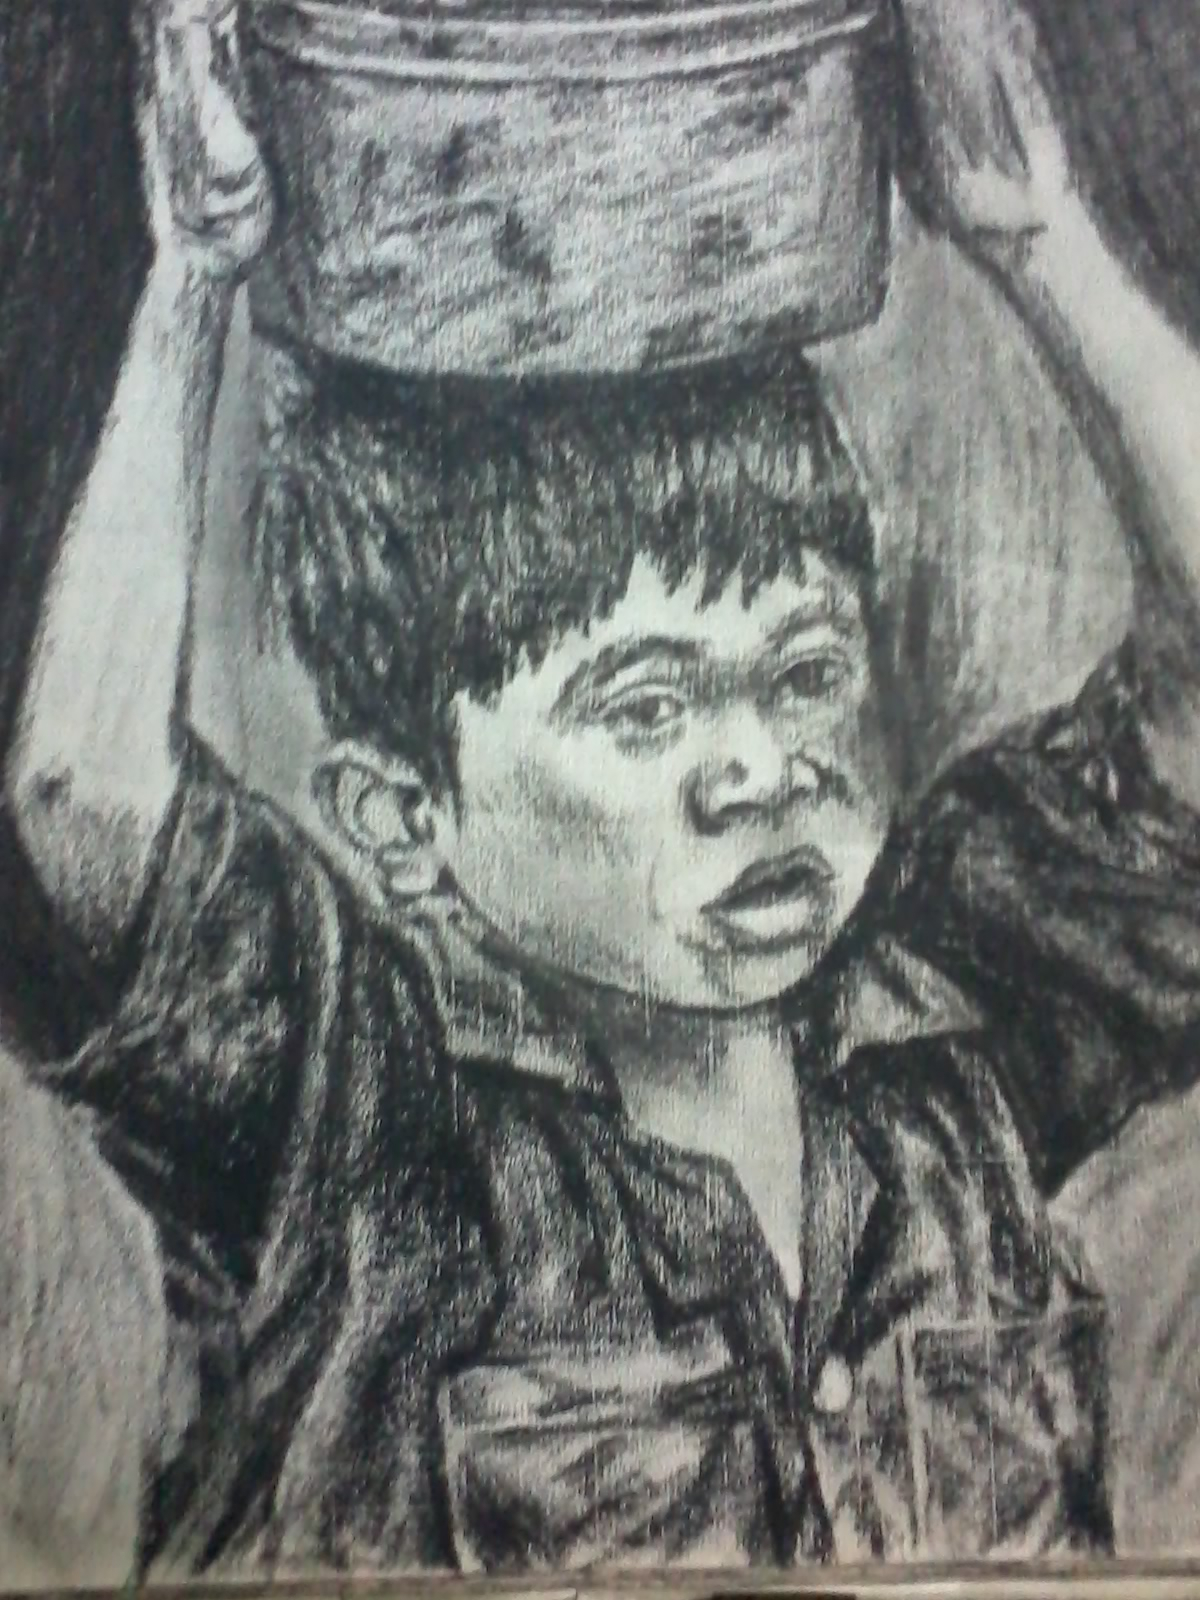 Child Labour Drawing by Sushmita Khosla - Pixels